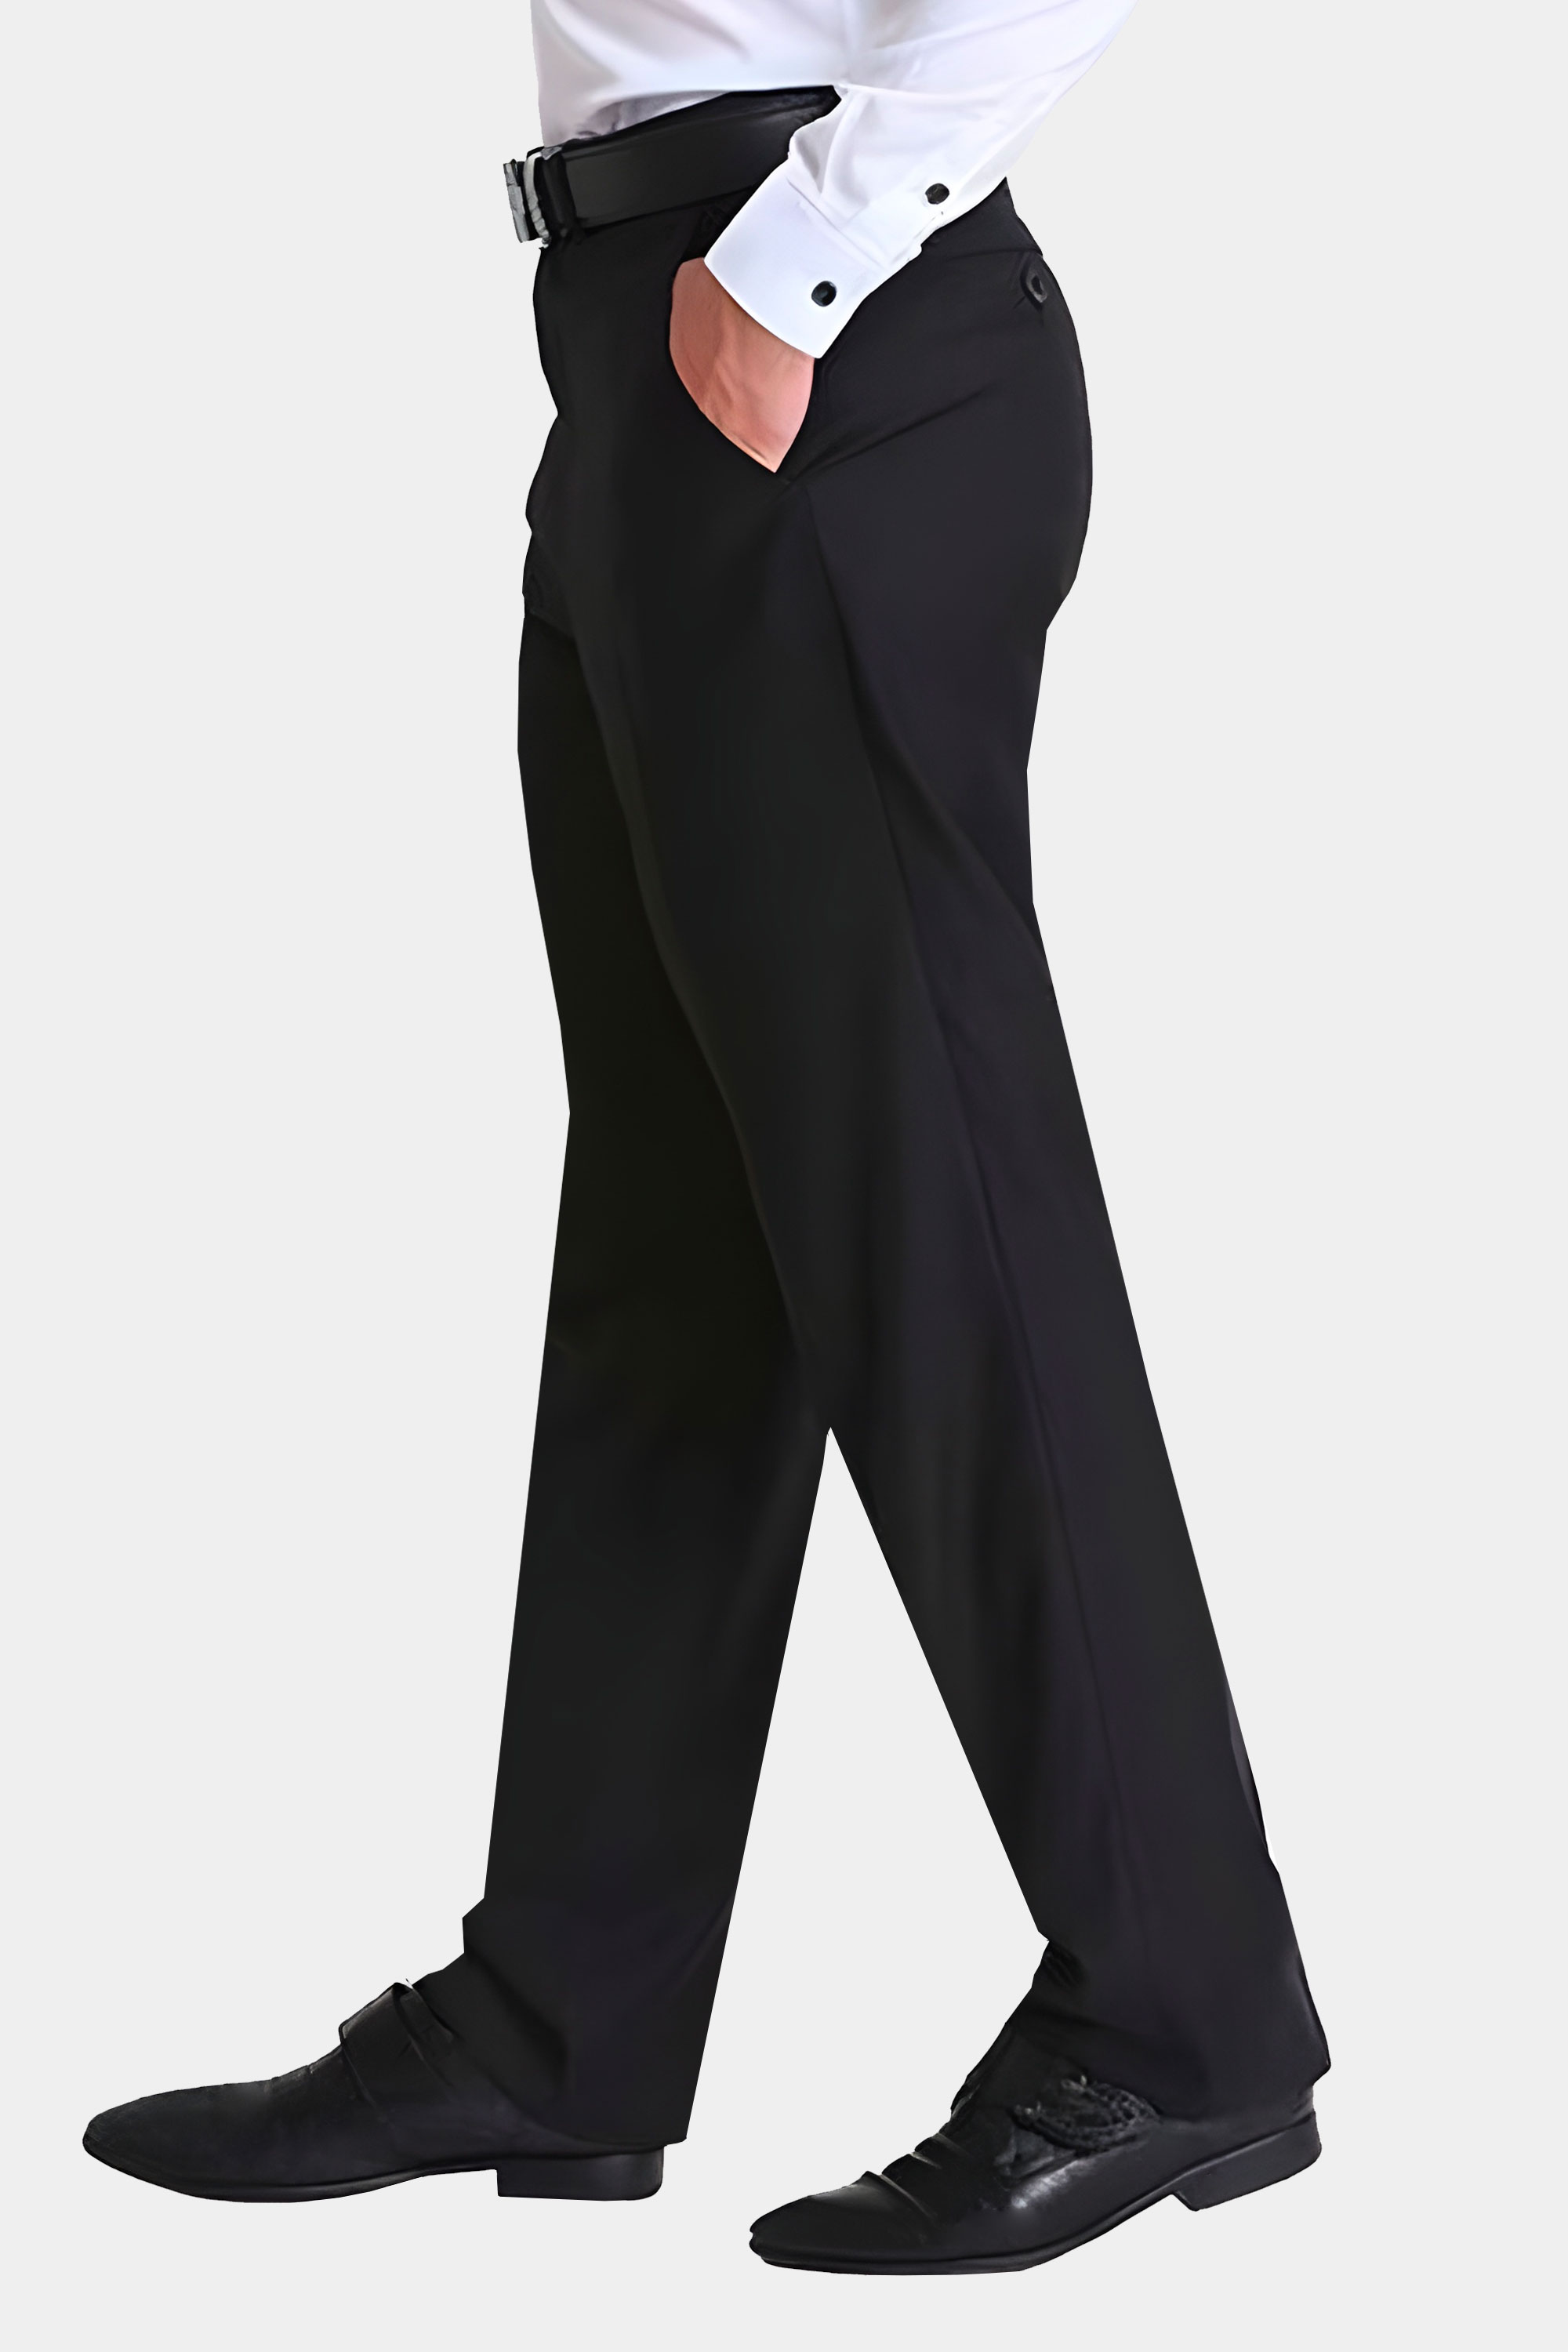 Mens-Formal-Black-Dress-Pants-from-Gentlemansguru.com